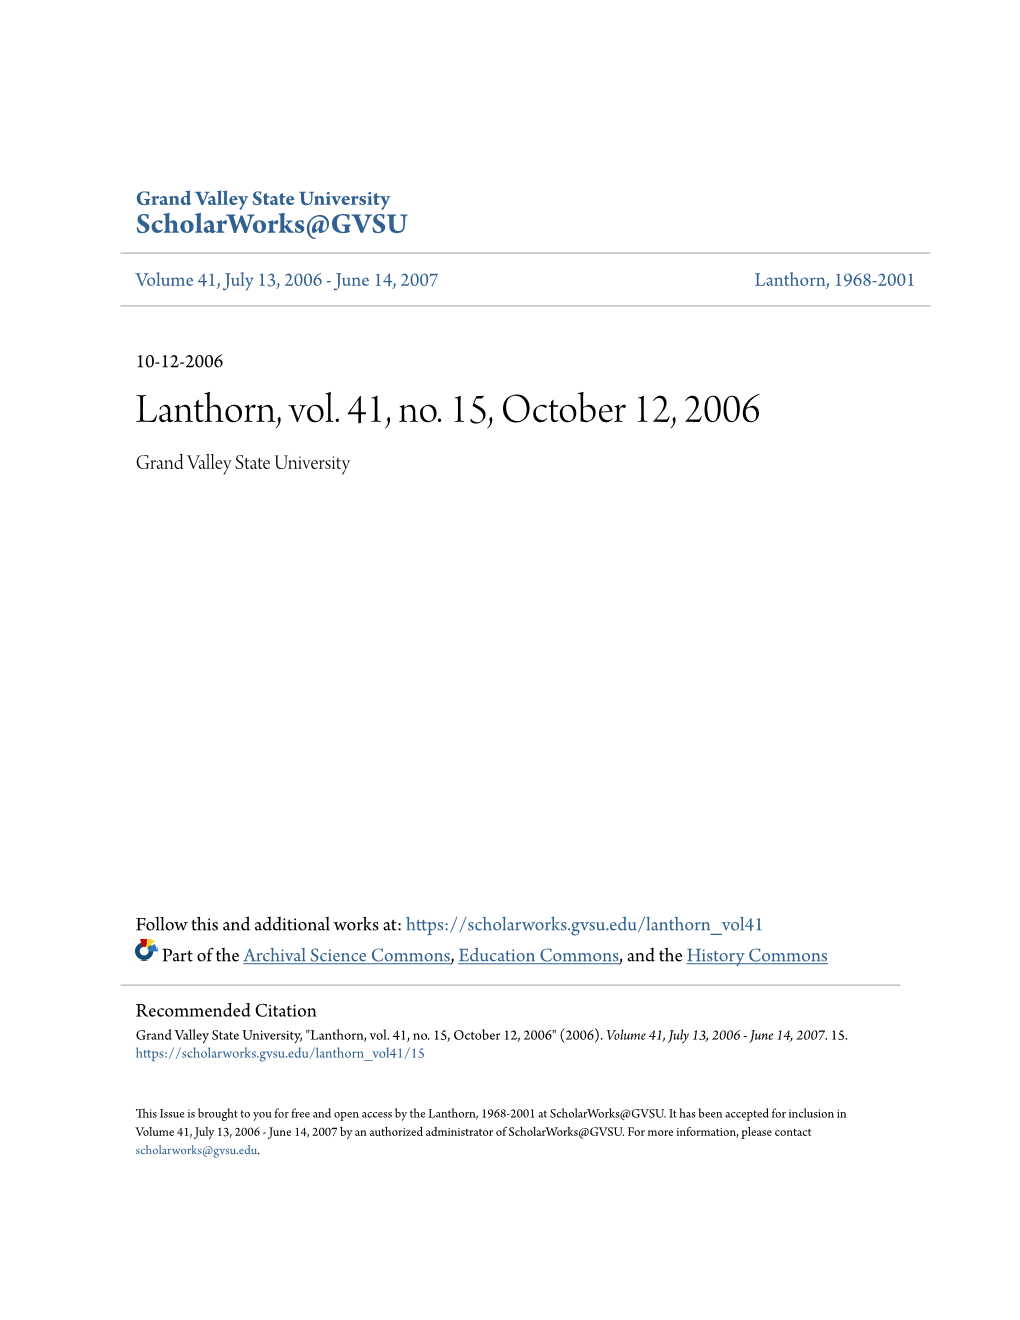 Lanthorn, Vol. 41, No. 15, October 12, 2006 Grand Valley State University